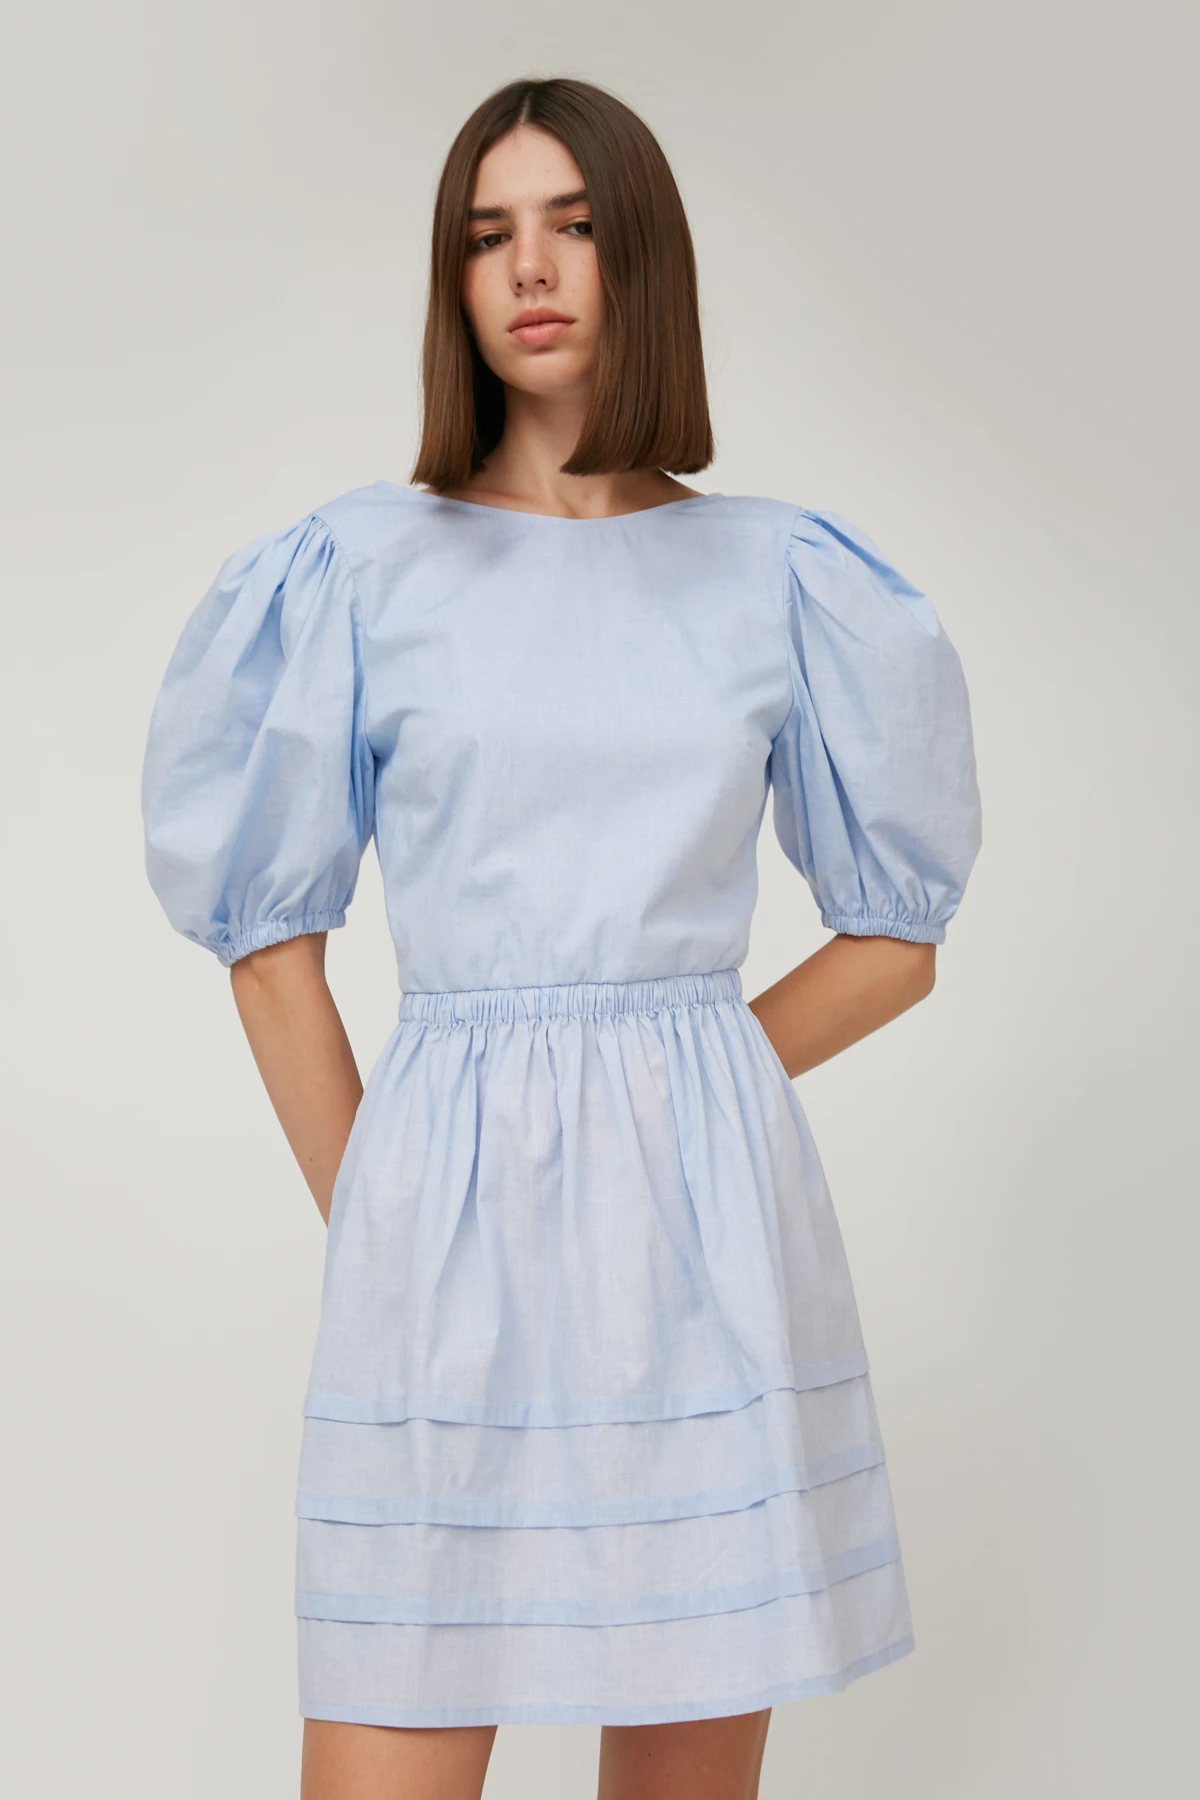 Blue short shirt fabric dress, photo 4